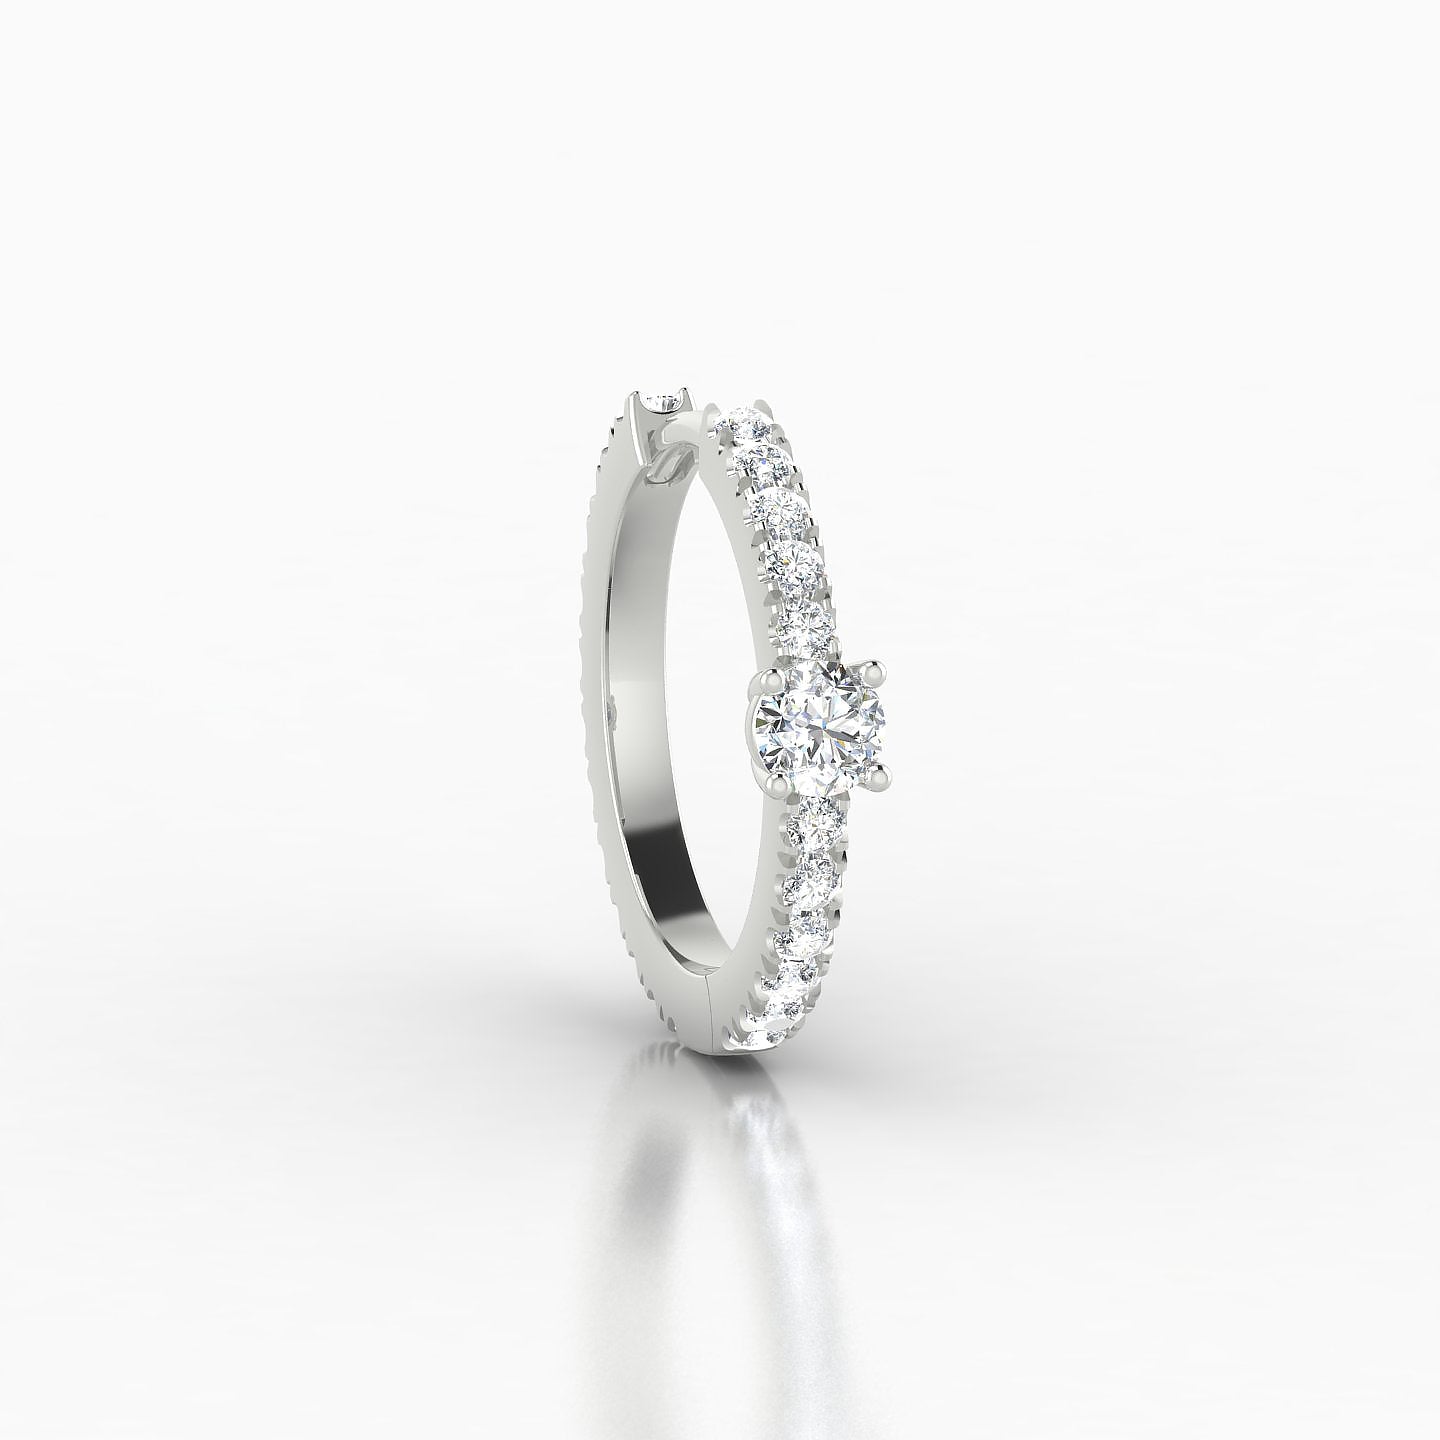 Inanna | 18k White Gold 9.5 mm Round Diamond Nose Ring Piercing